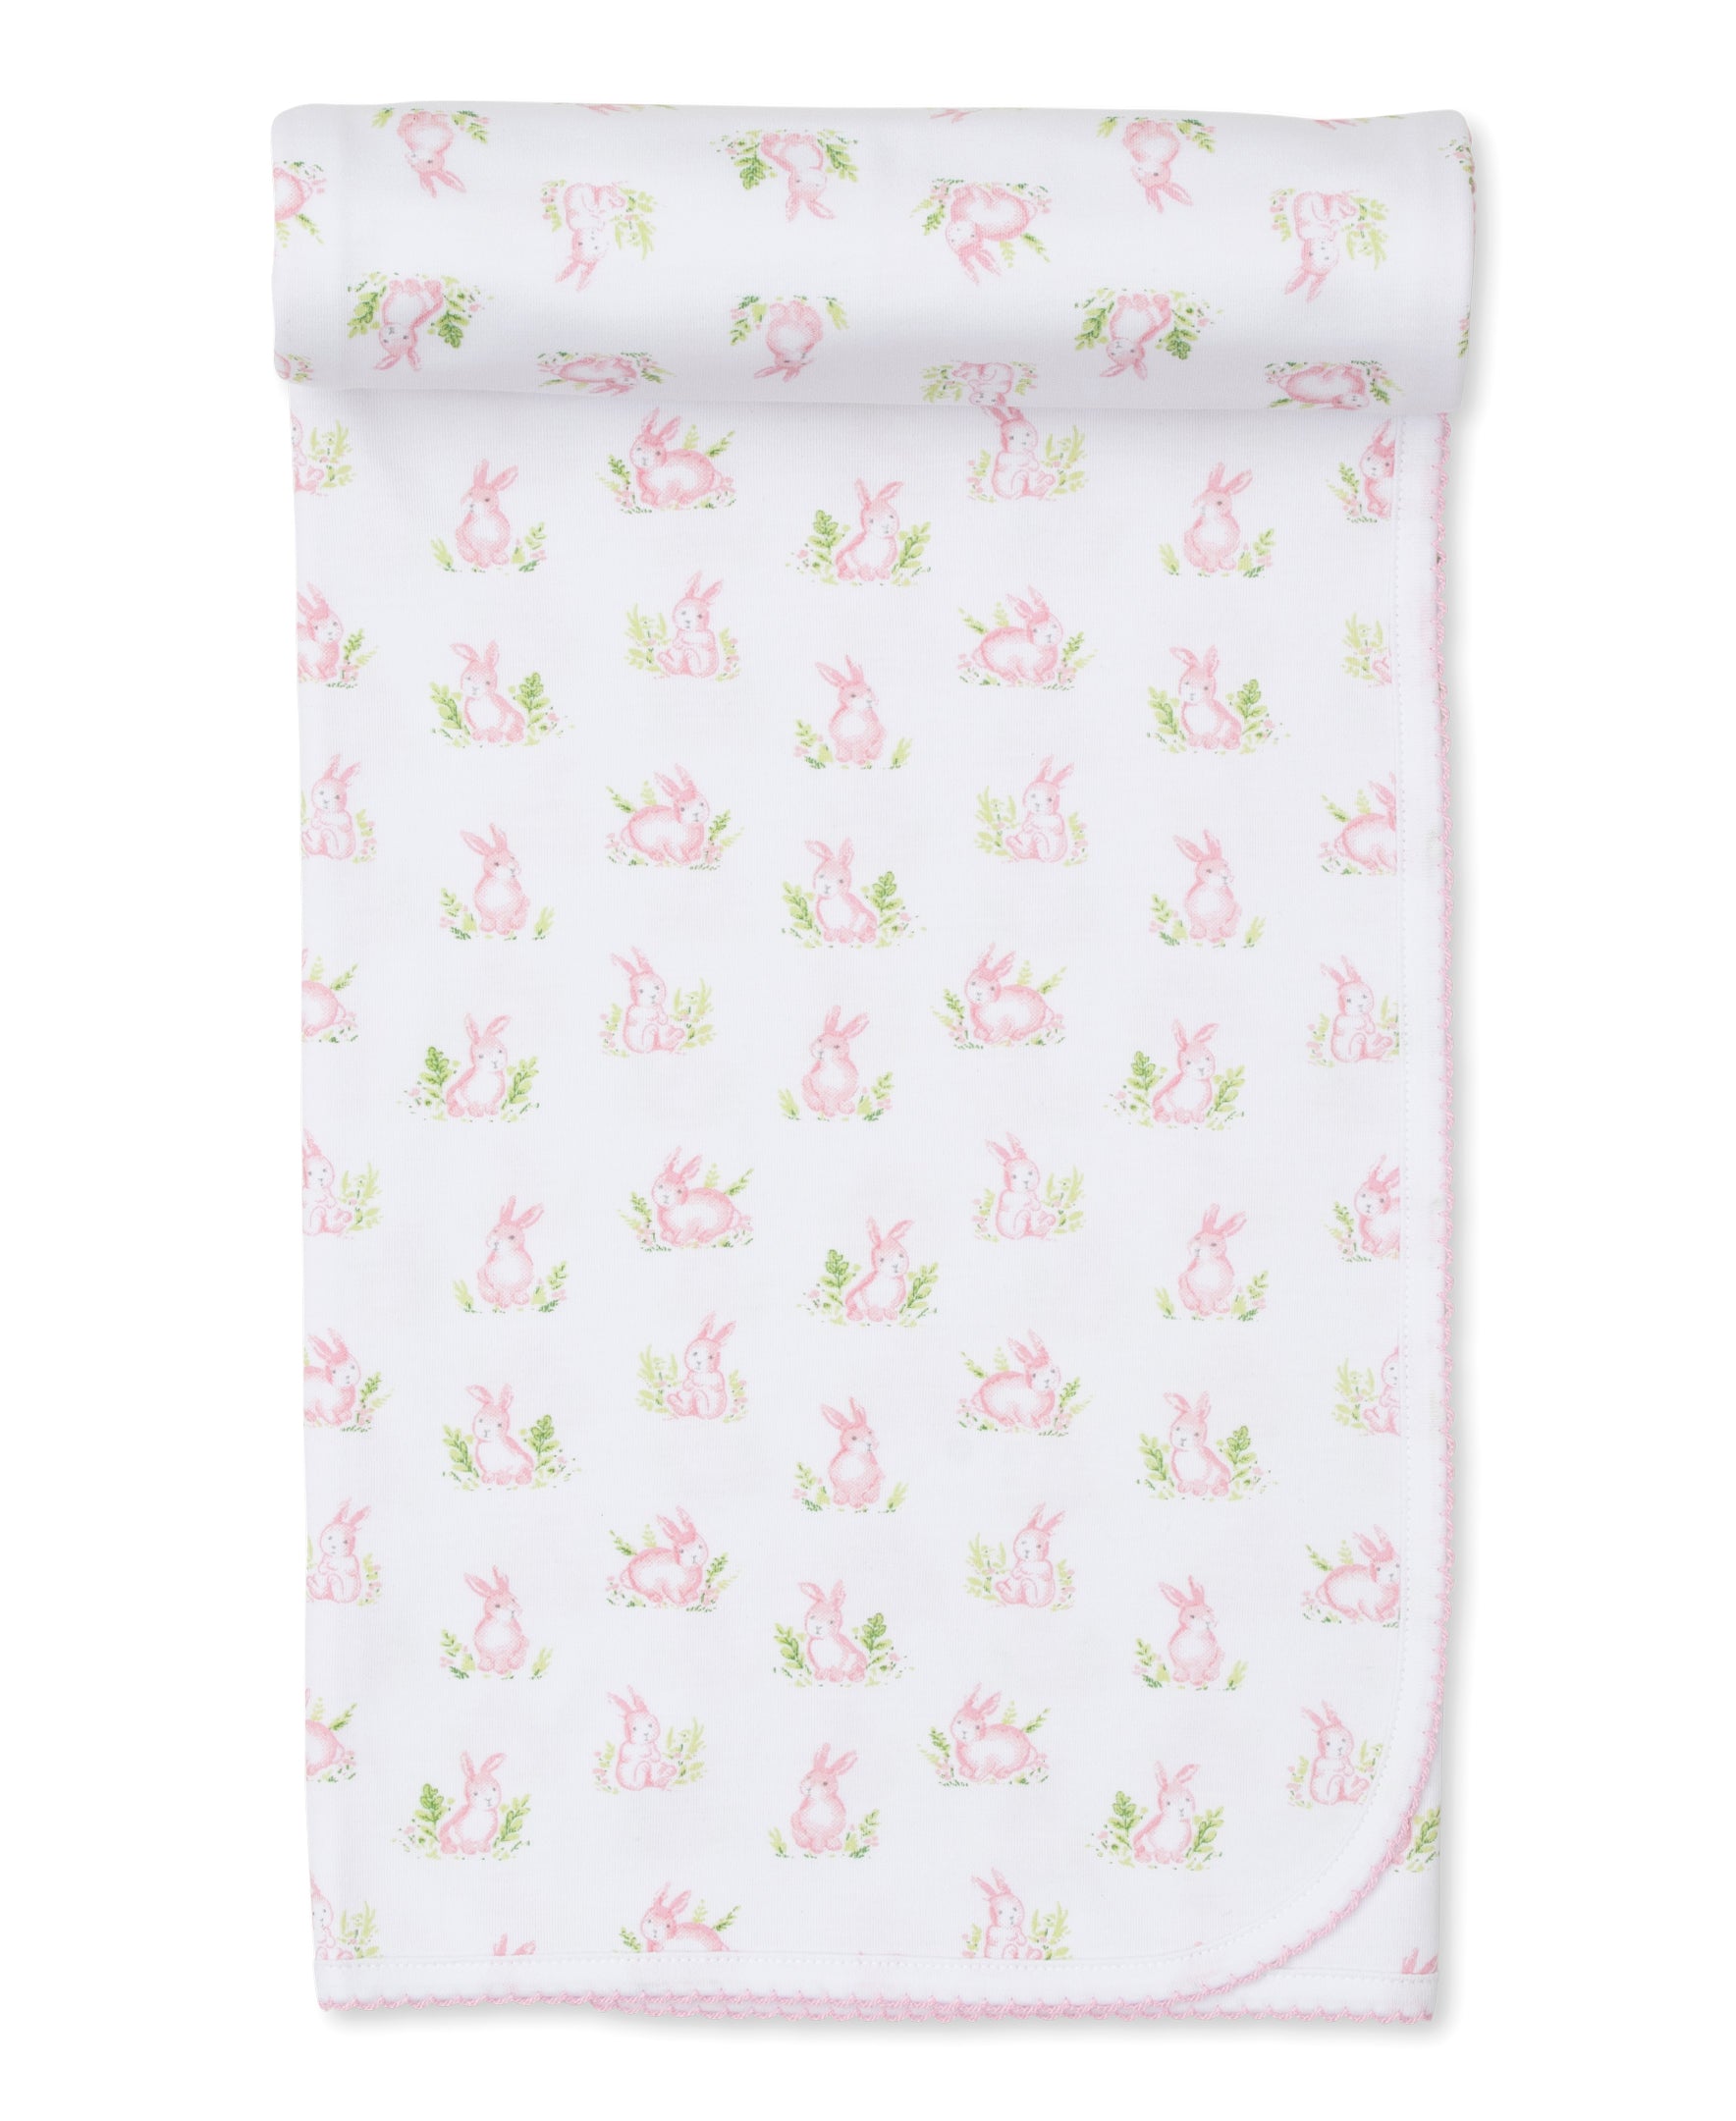 Cottontail Hollows: Light Pink Bunnies Print Blanket